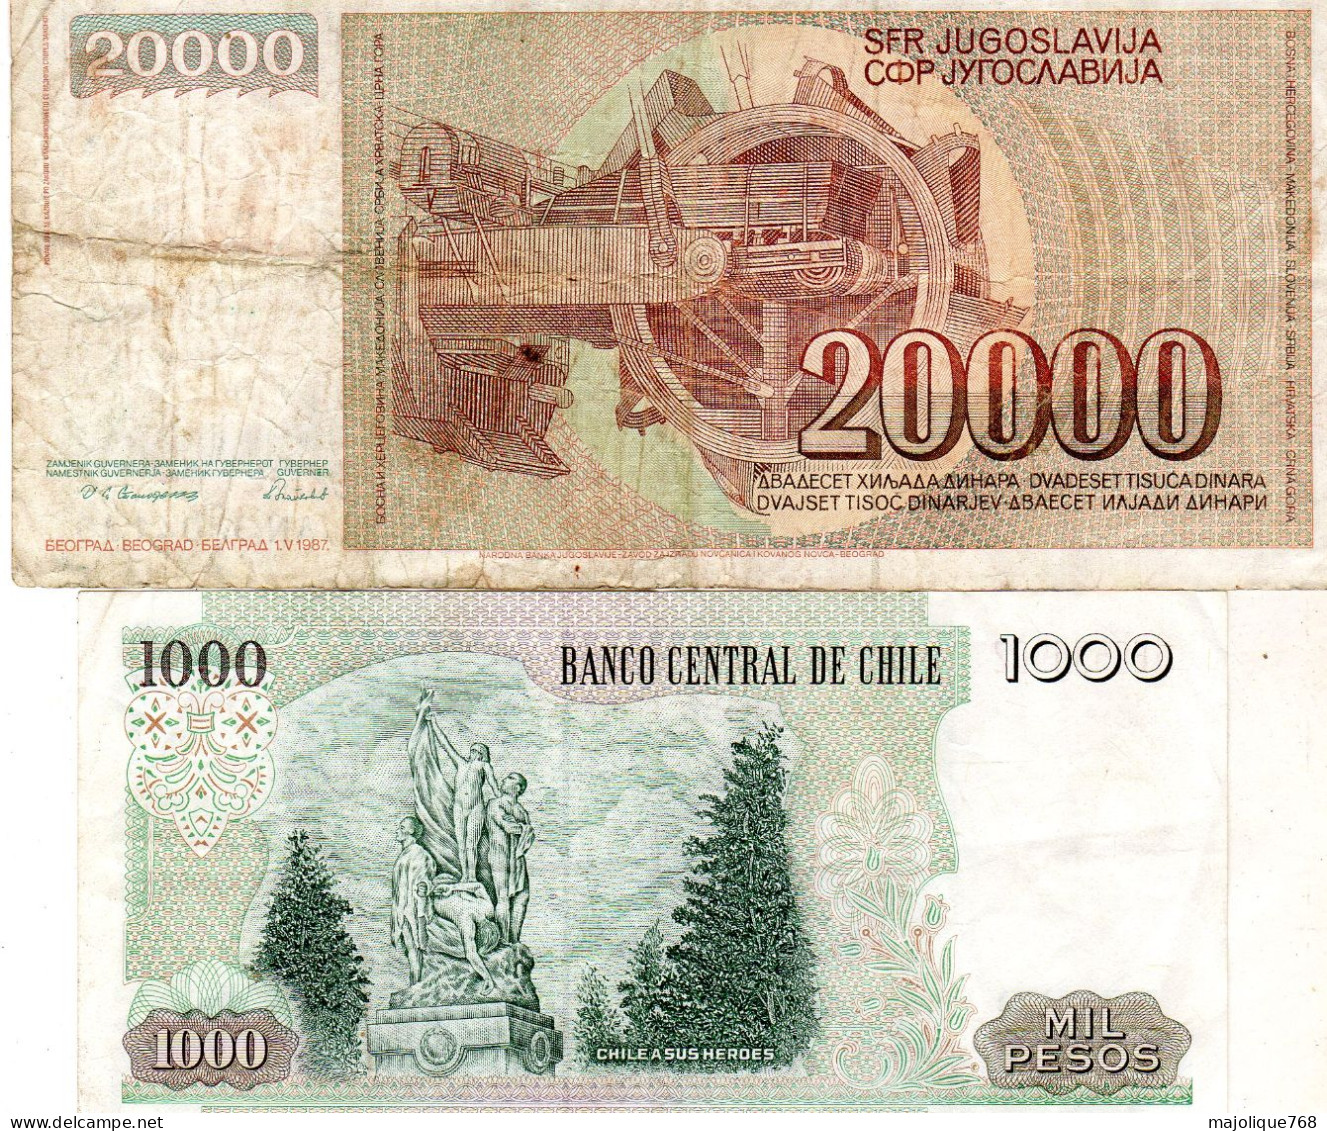 Lot De 2 Billets étranger - 20000 Dinara 1987 De Yougoslavie - 1000 Pésos 2005 Du Chili - Vrac - Billets